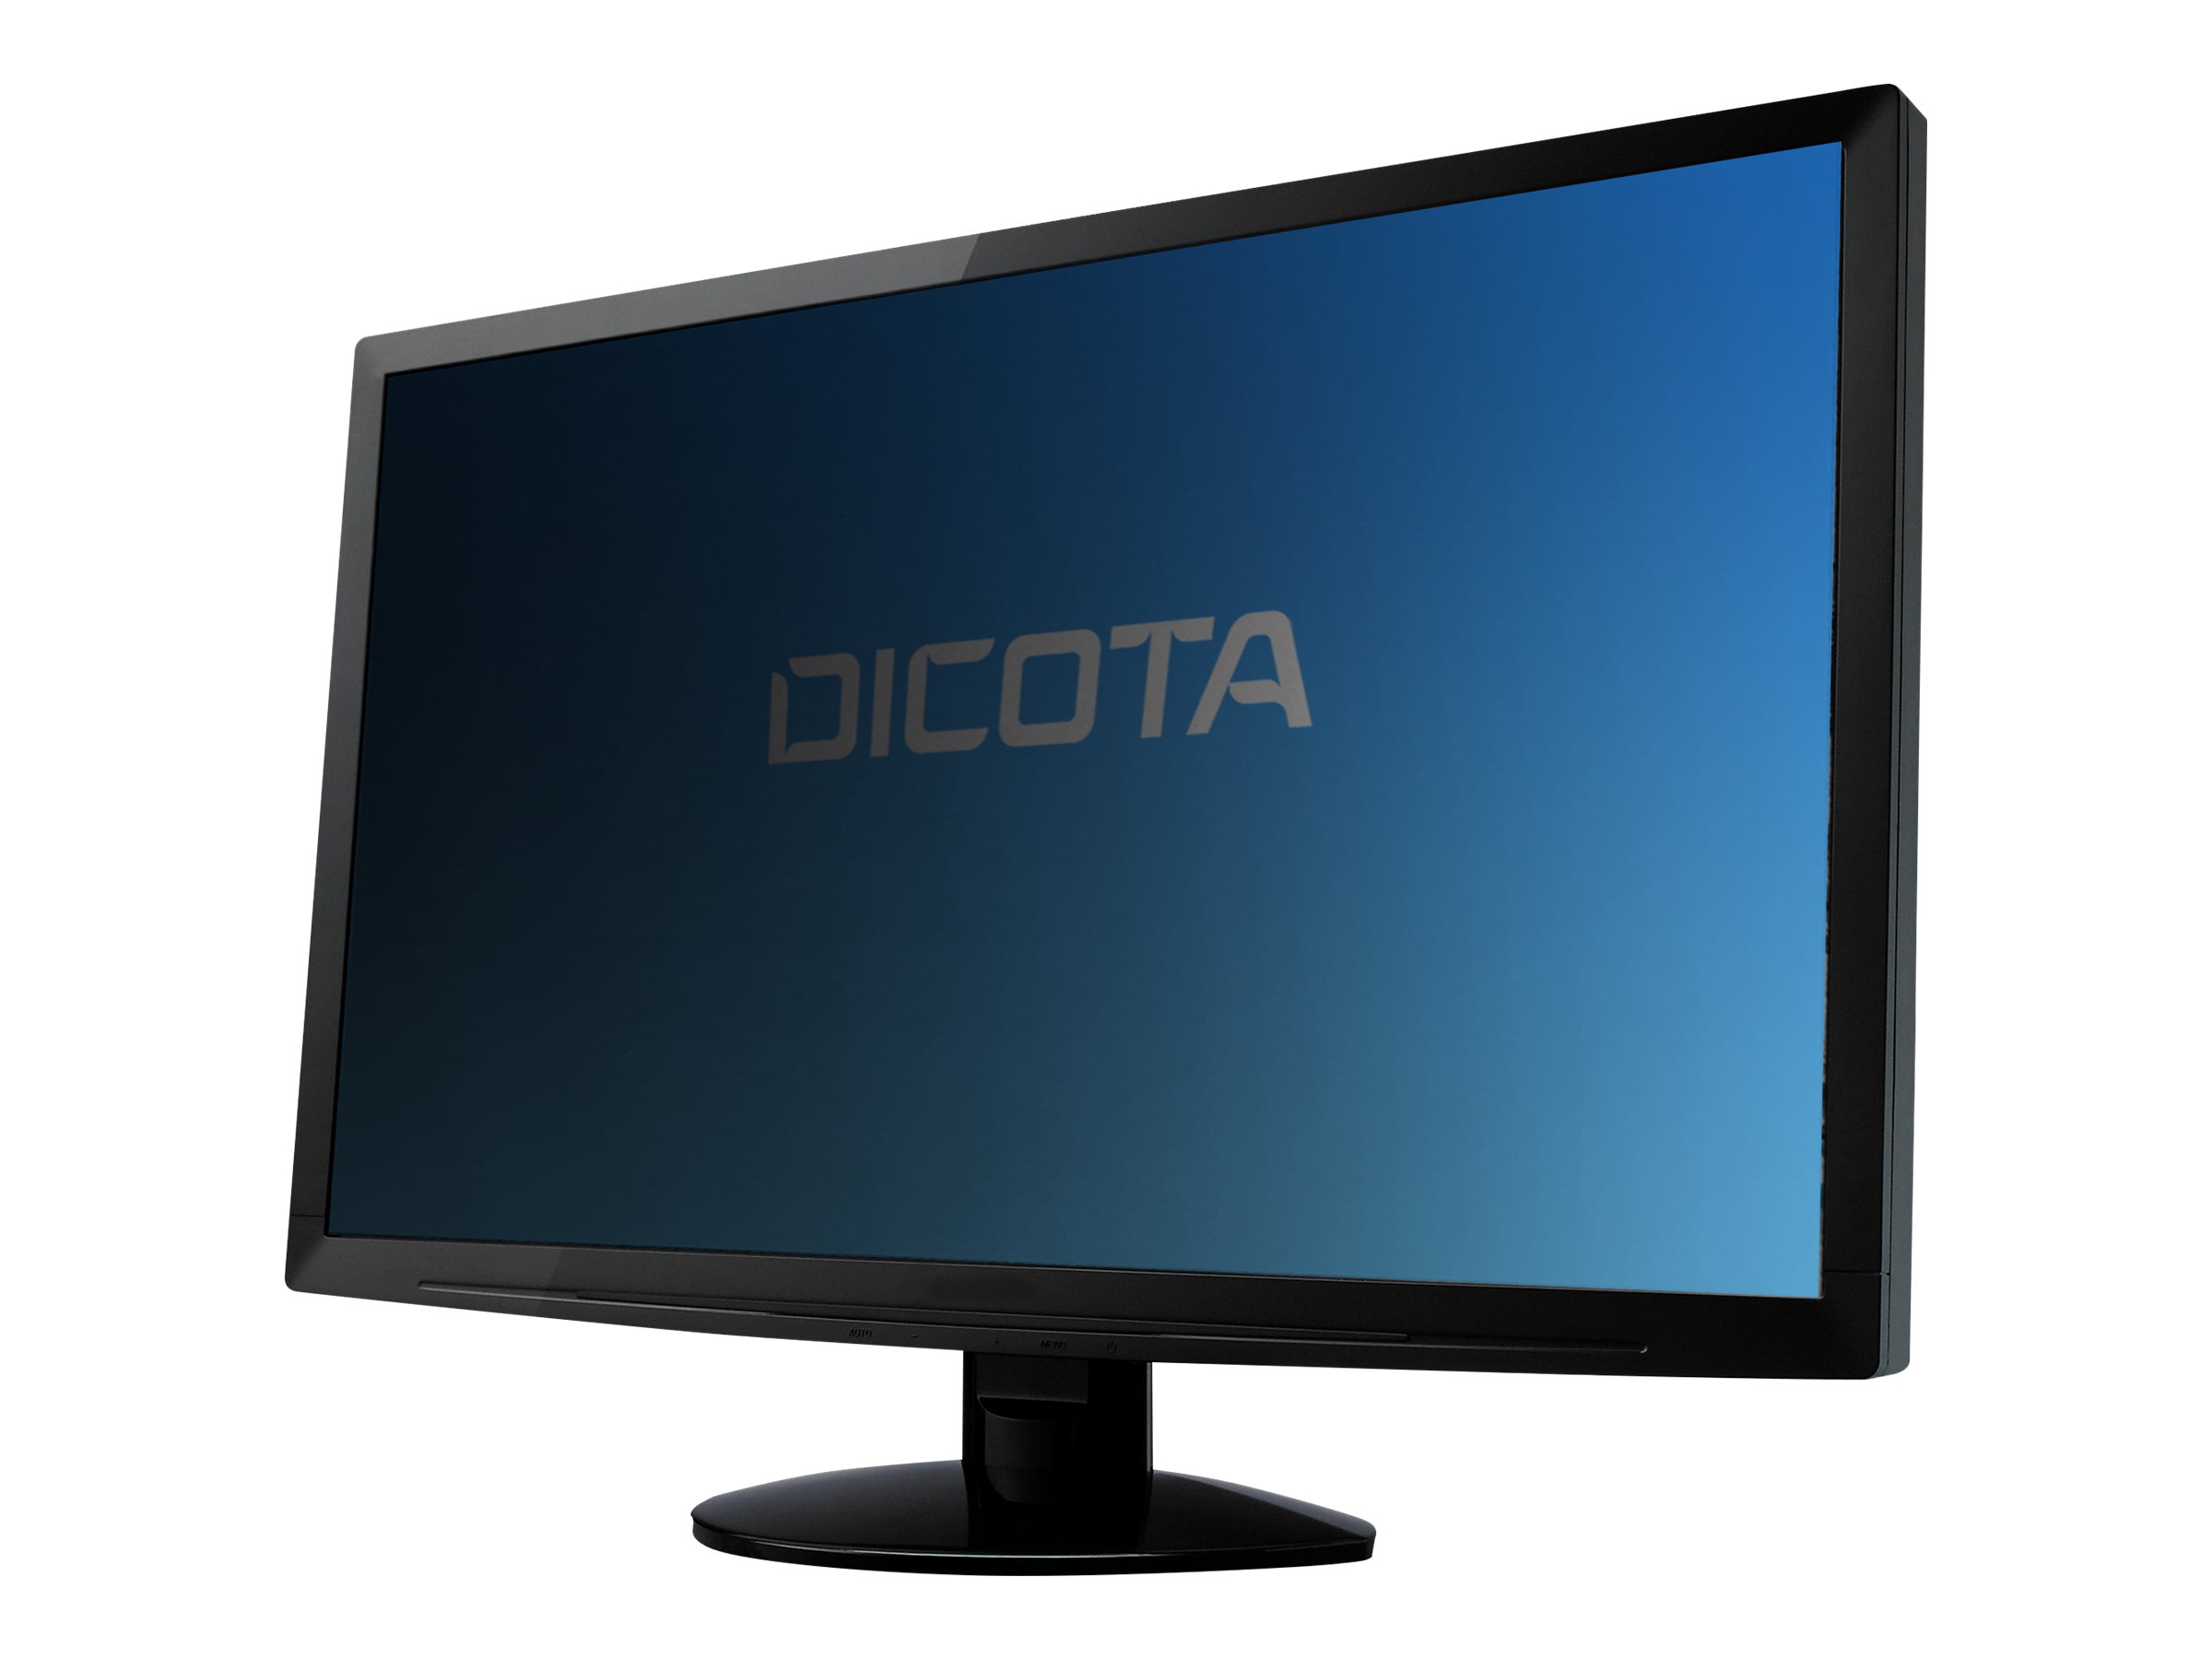 Dicota Secret - Blickschutzfilter für Bildschirme